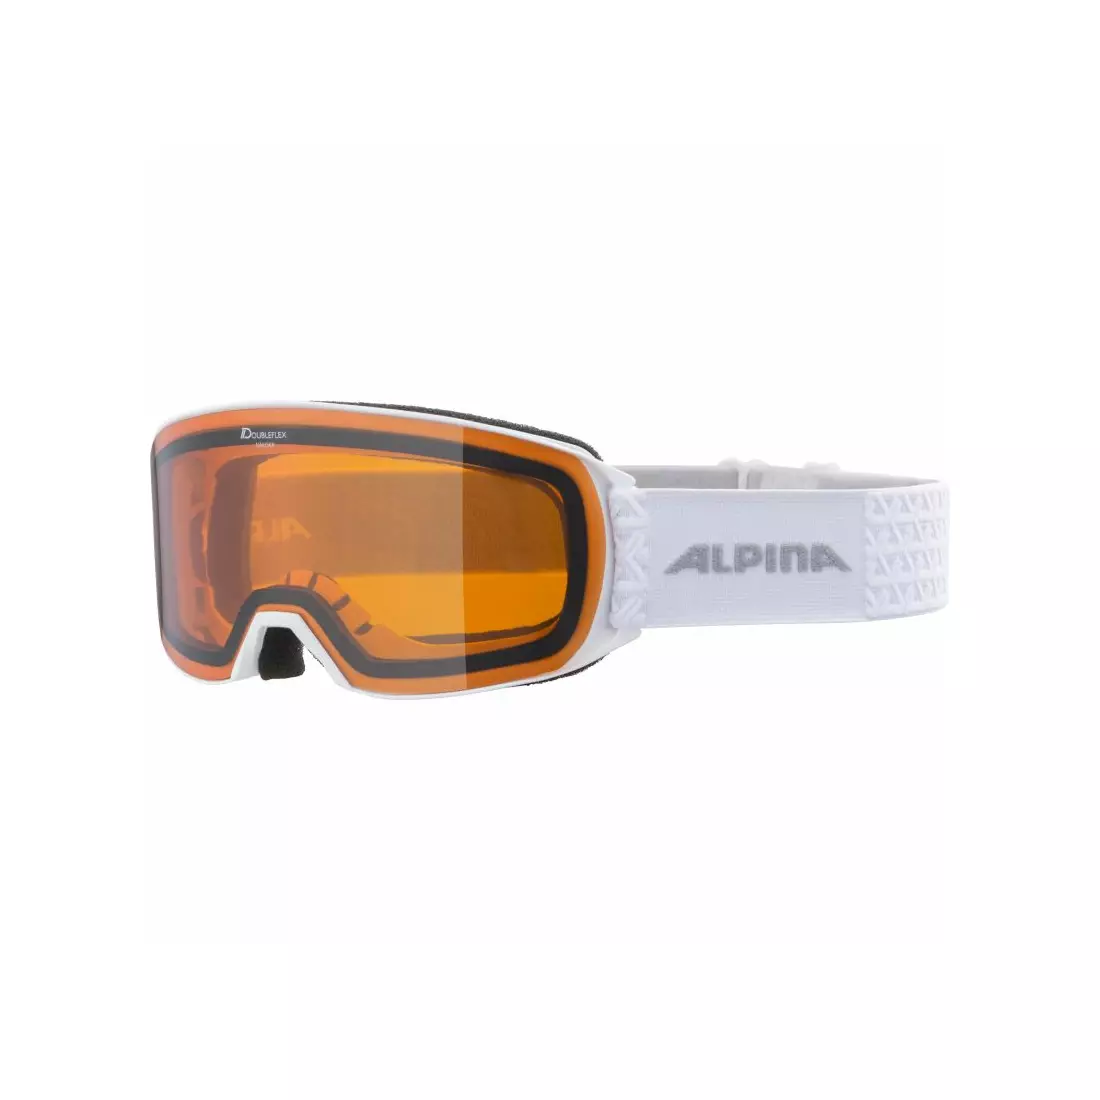 ALPINA gogle narciarskie / snowboardowe M40 NAKISKA DH white A7281111